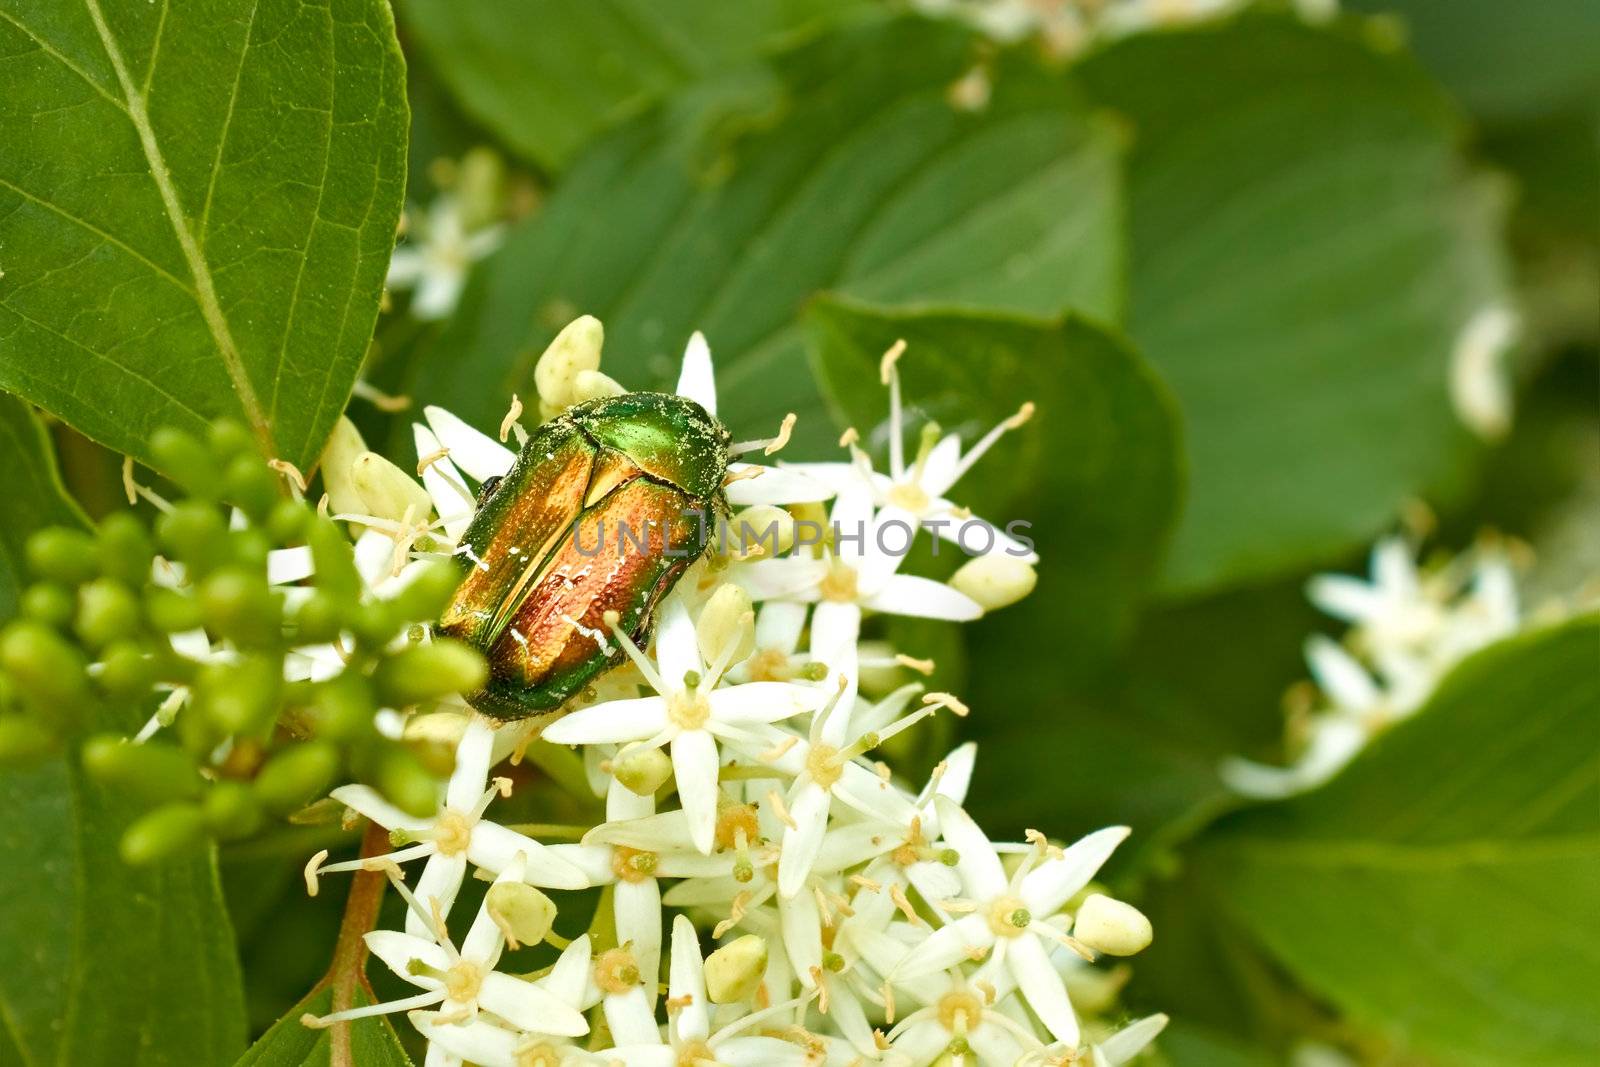 Big green beetle (rose chafer) sitting on the flowering plants in springtime. Latin name: cetonia aurata